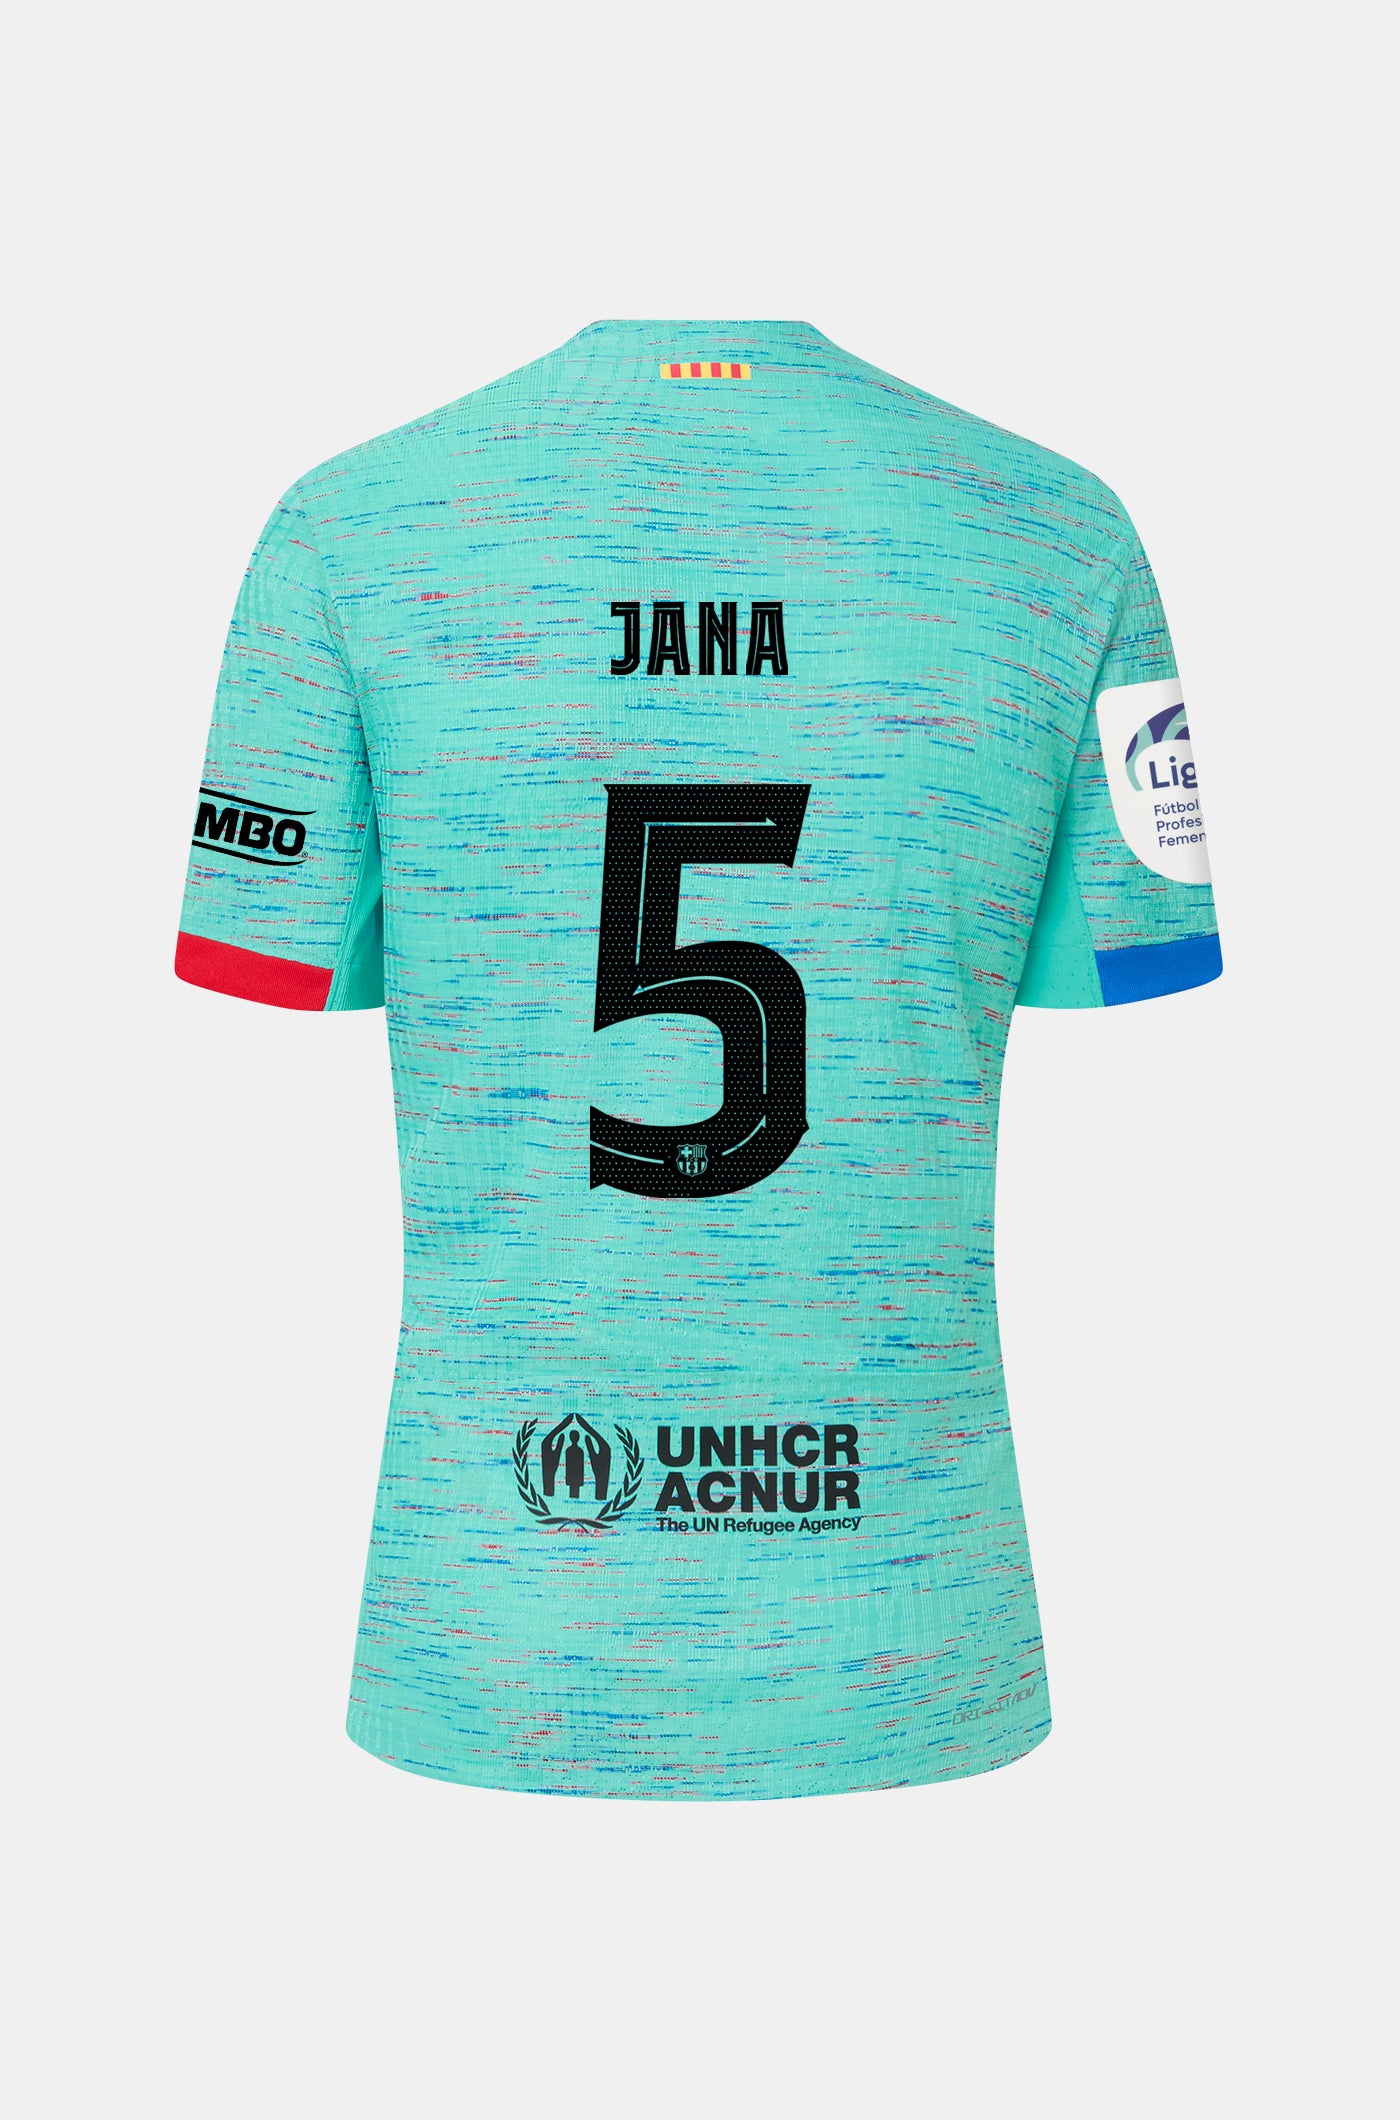 Liga F FC Barcelona third Shirt 23/24 Player’s Edition - JANA